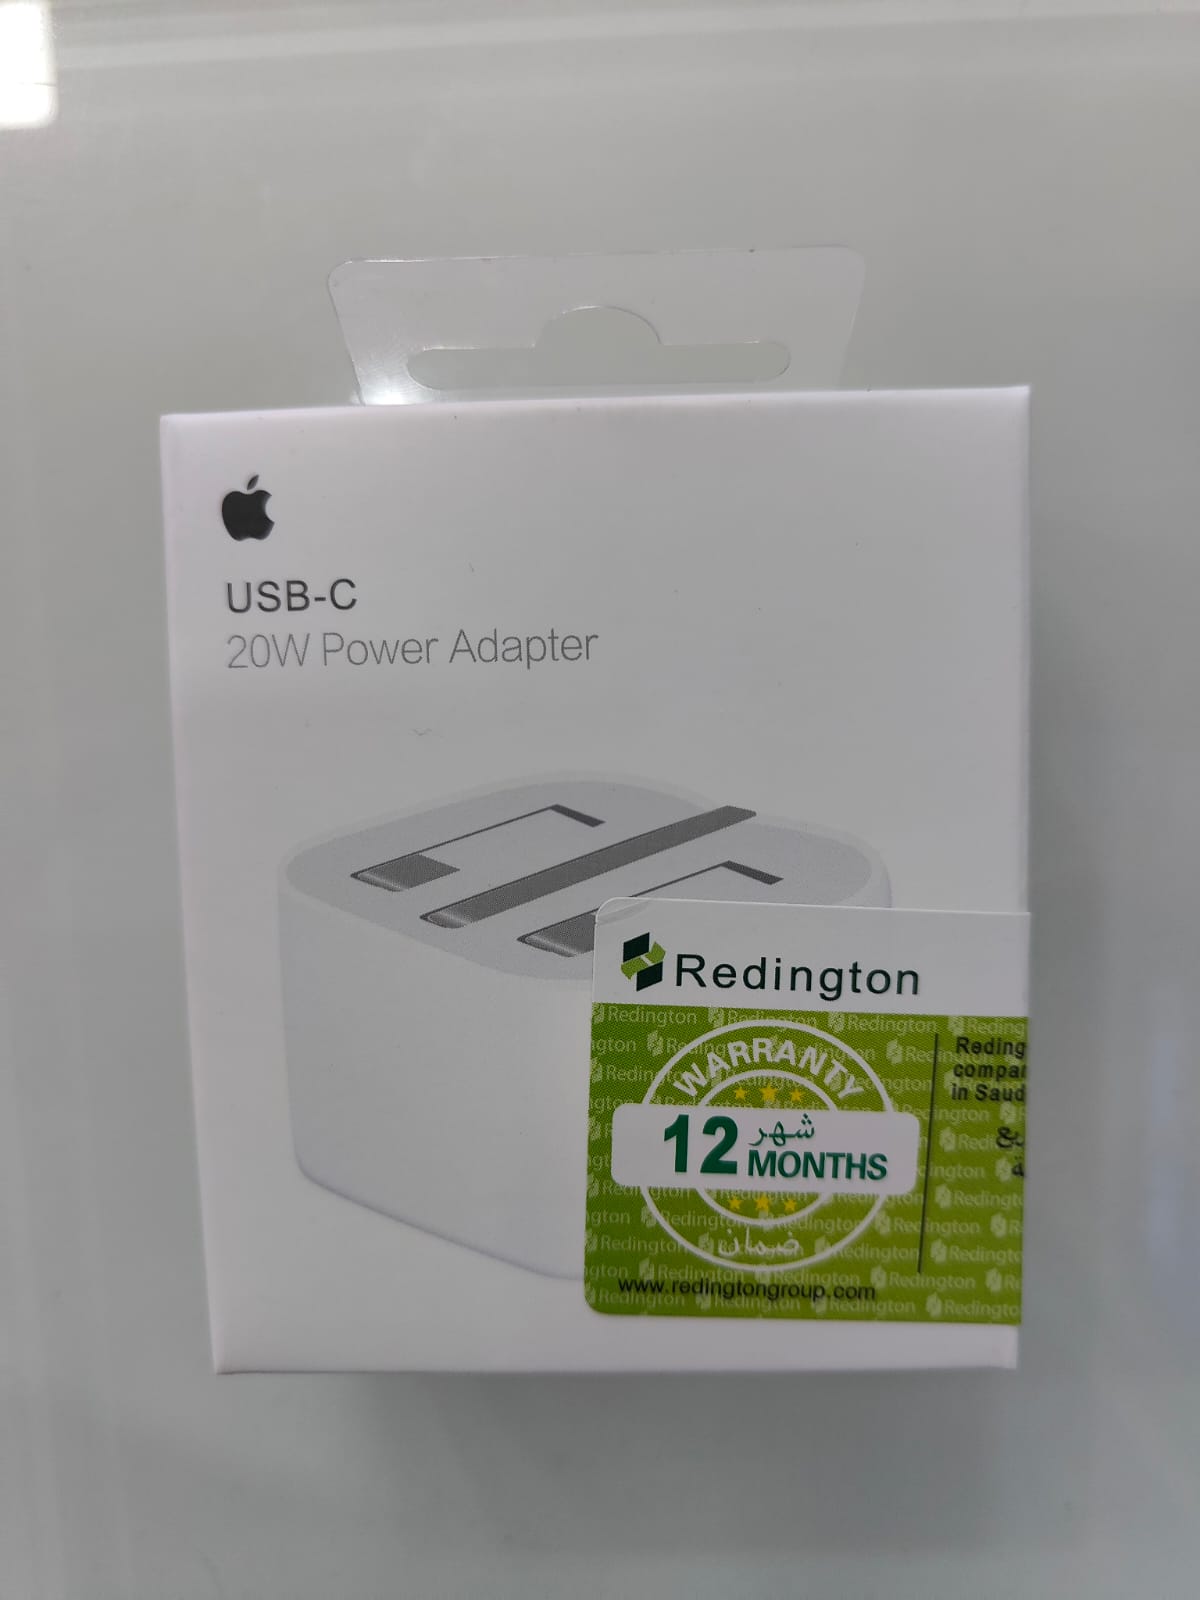 Buy Online Redington Apple USB-C 20W Power Adapter at Bizbazar.com